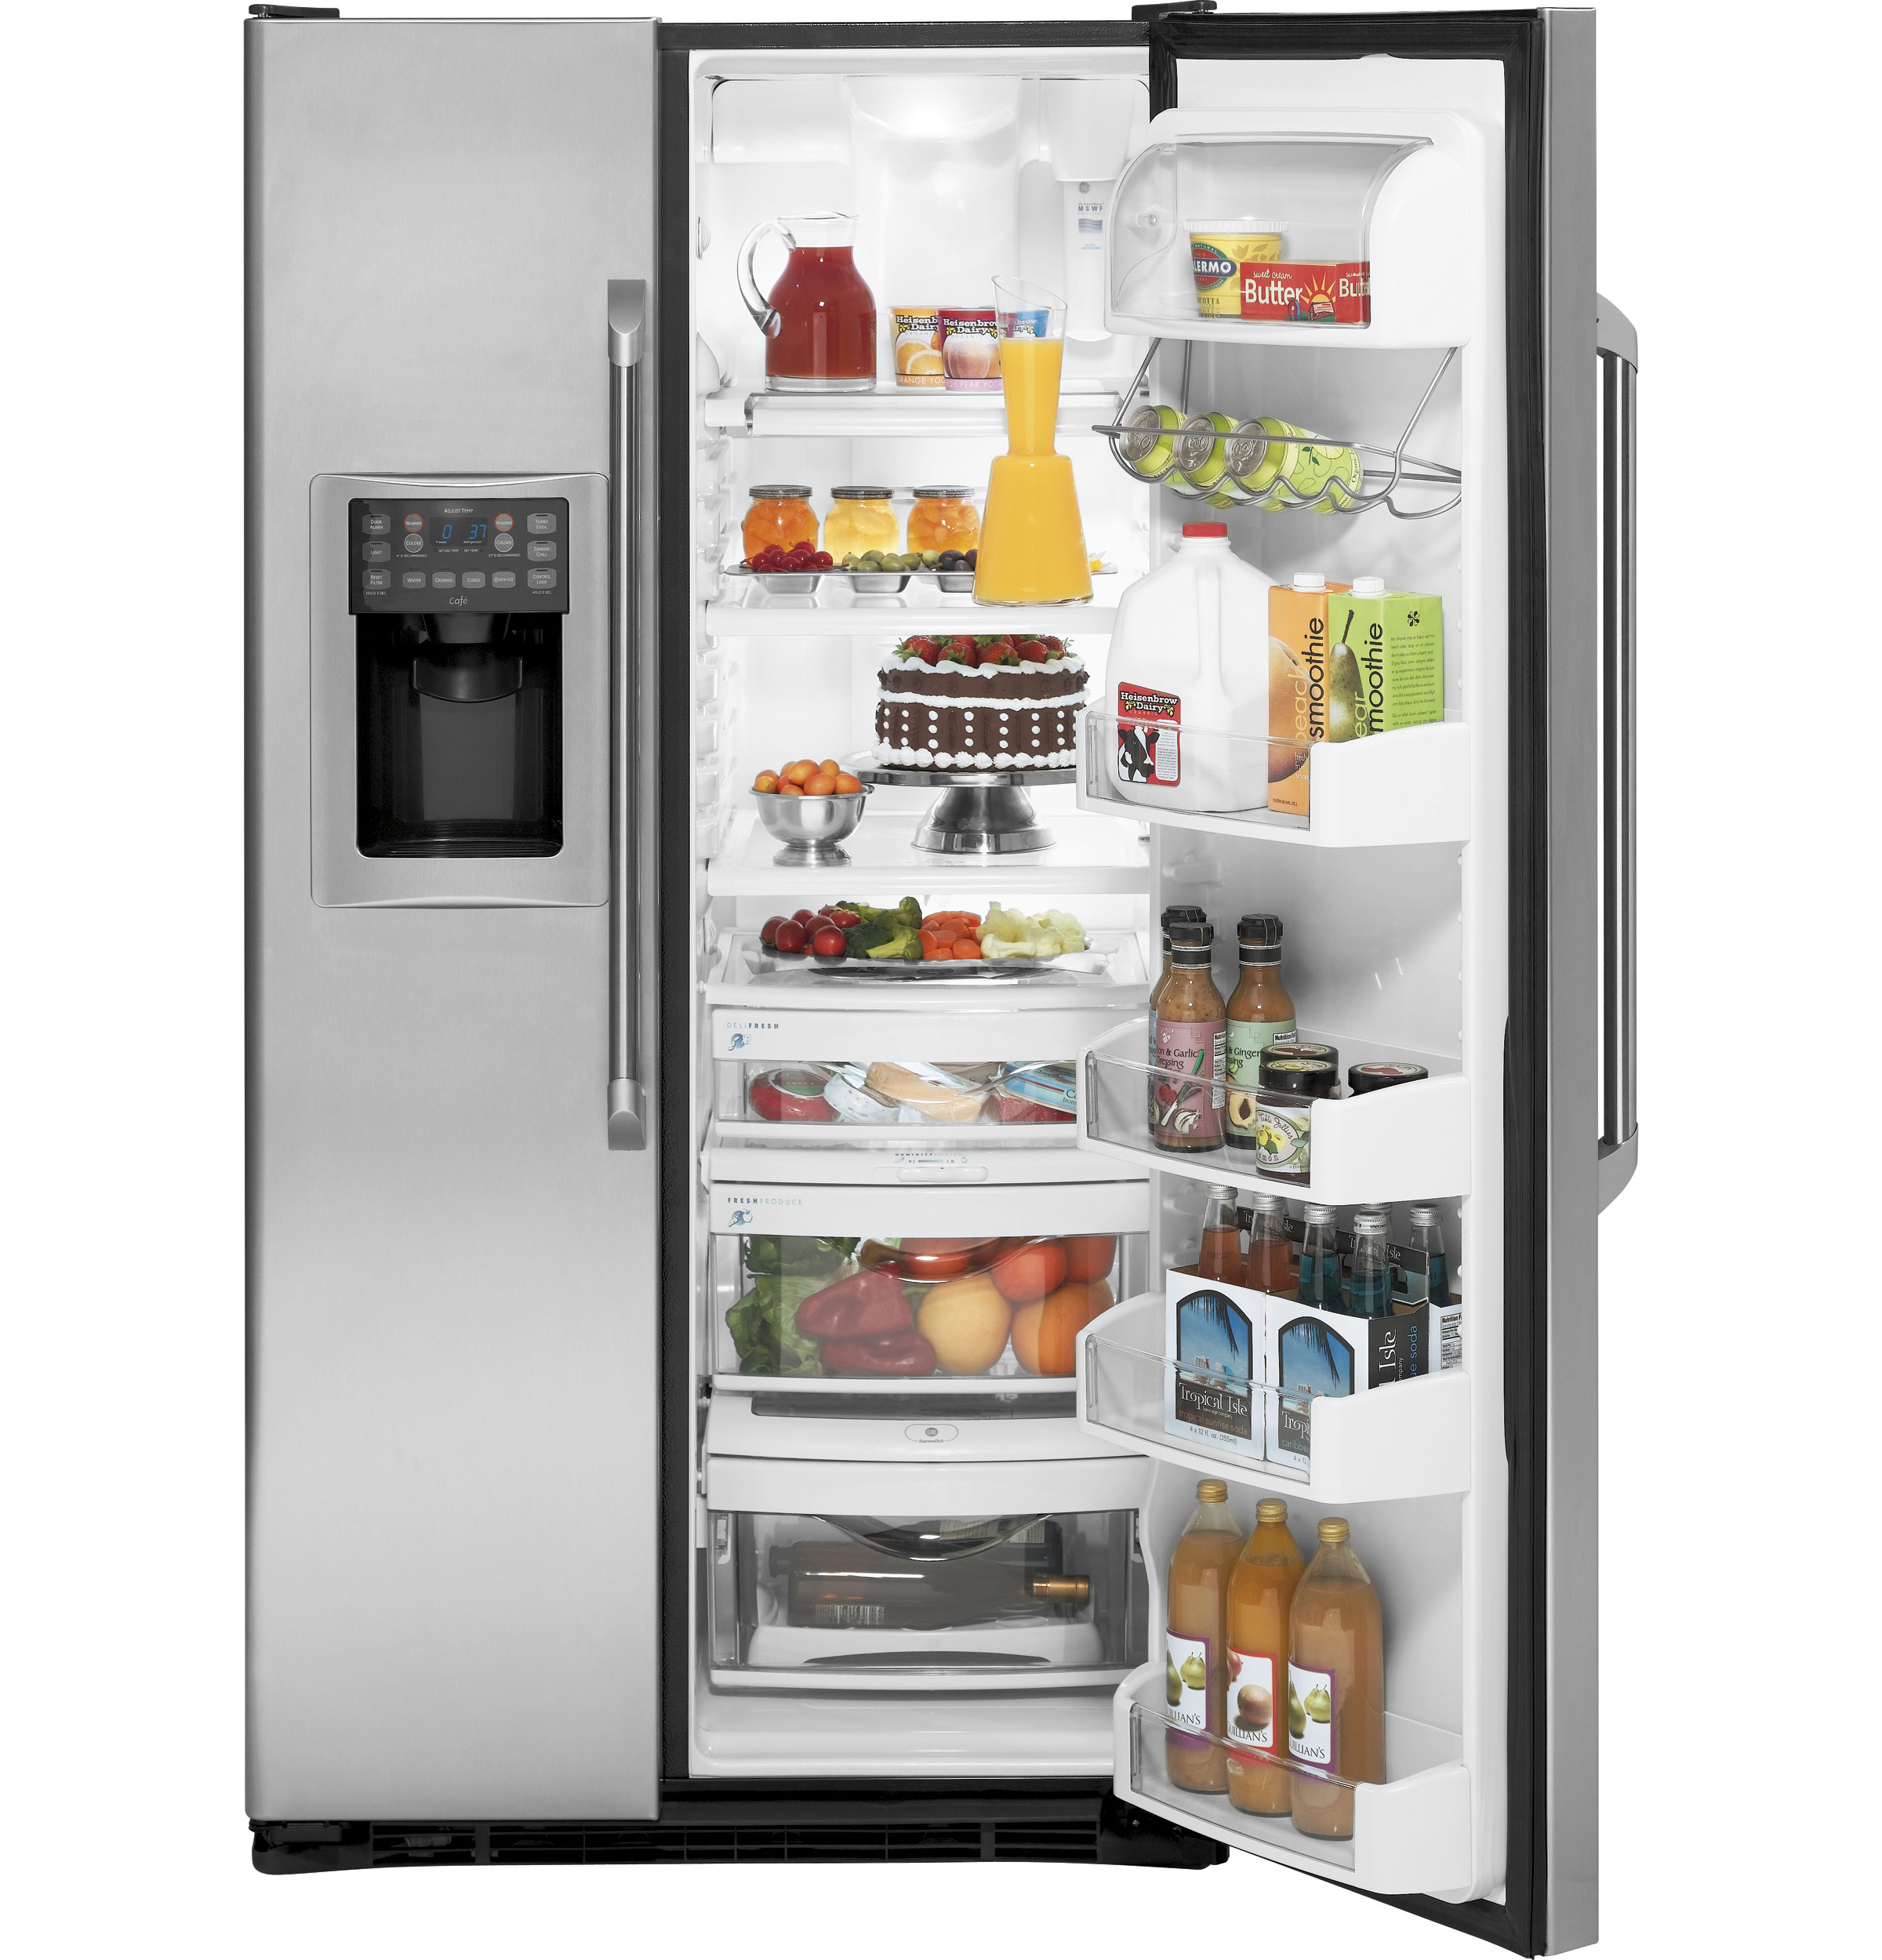 GE Café™ Series ENERGY STAR® 25.4 Cu. Ft. Side-By-Side Refrigerator